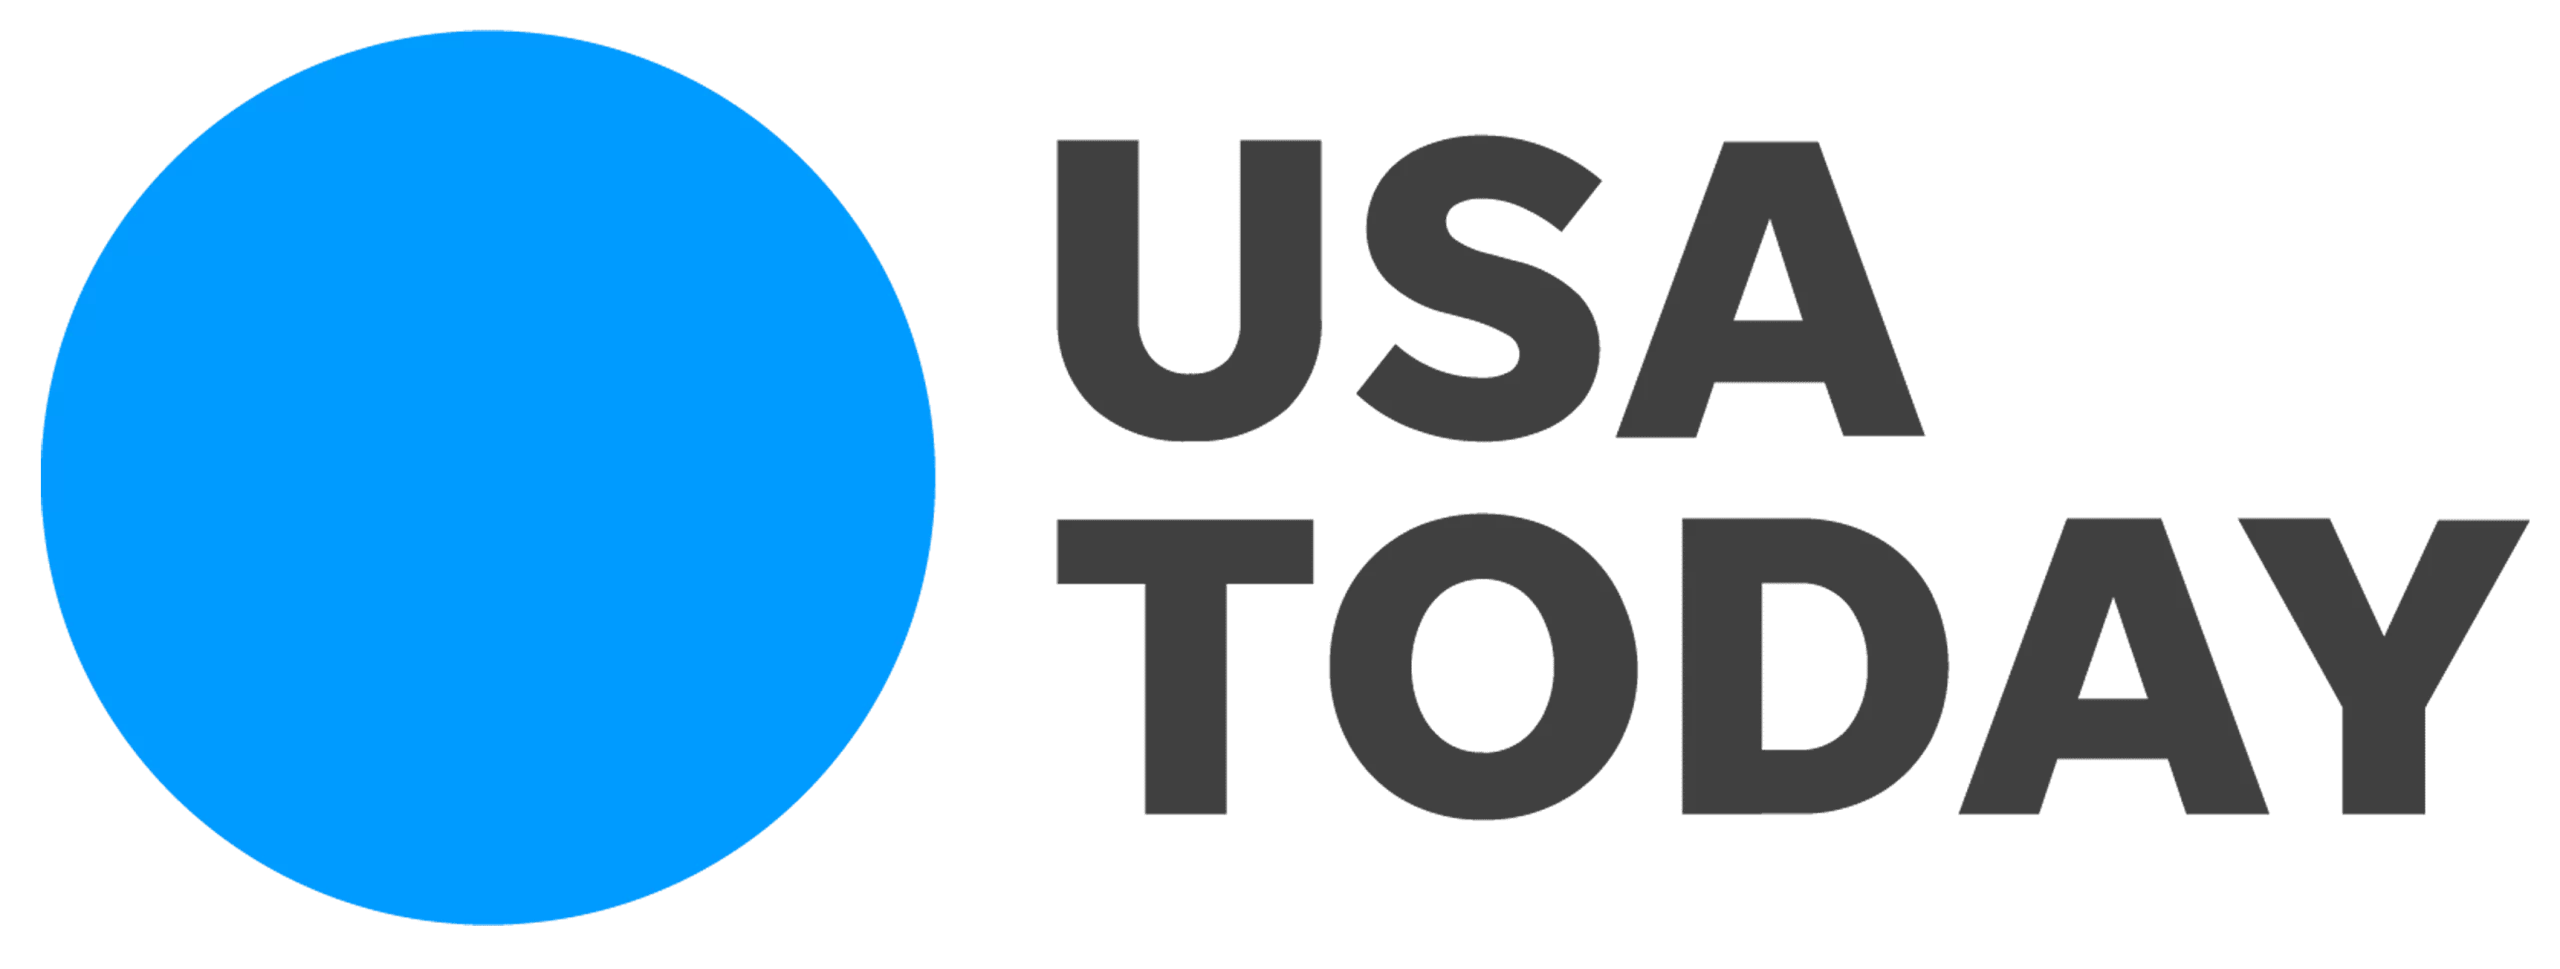 USA Today logo scaled 1 | Bogart Wealth